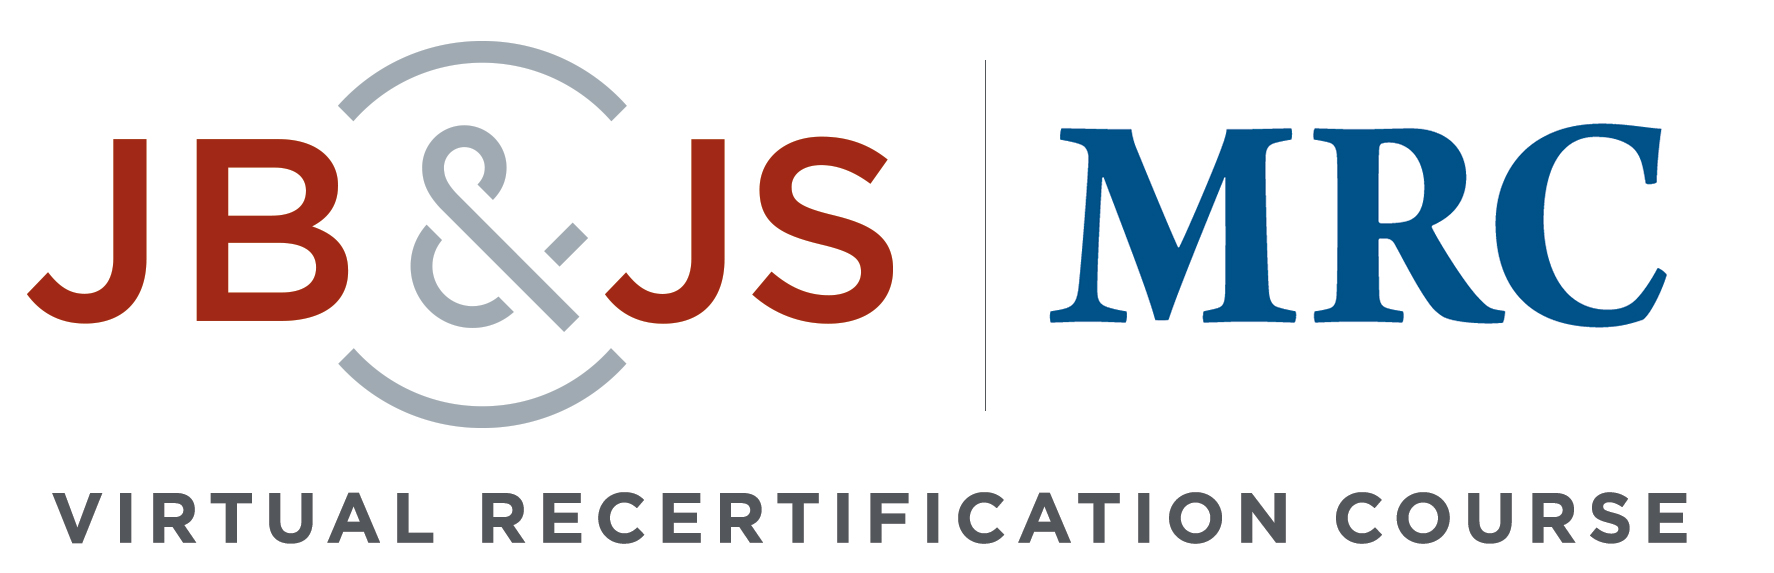 Virtual Recertification Course- JBJS & Miller Review Course